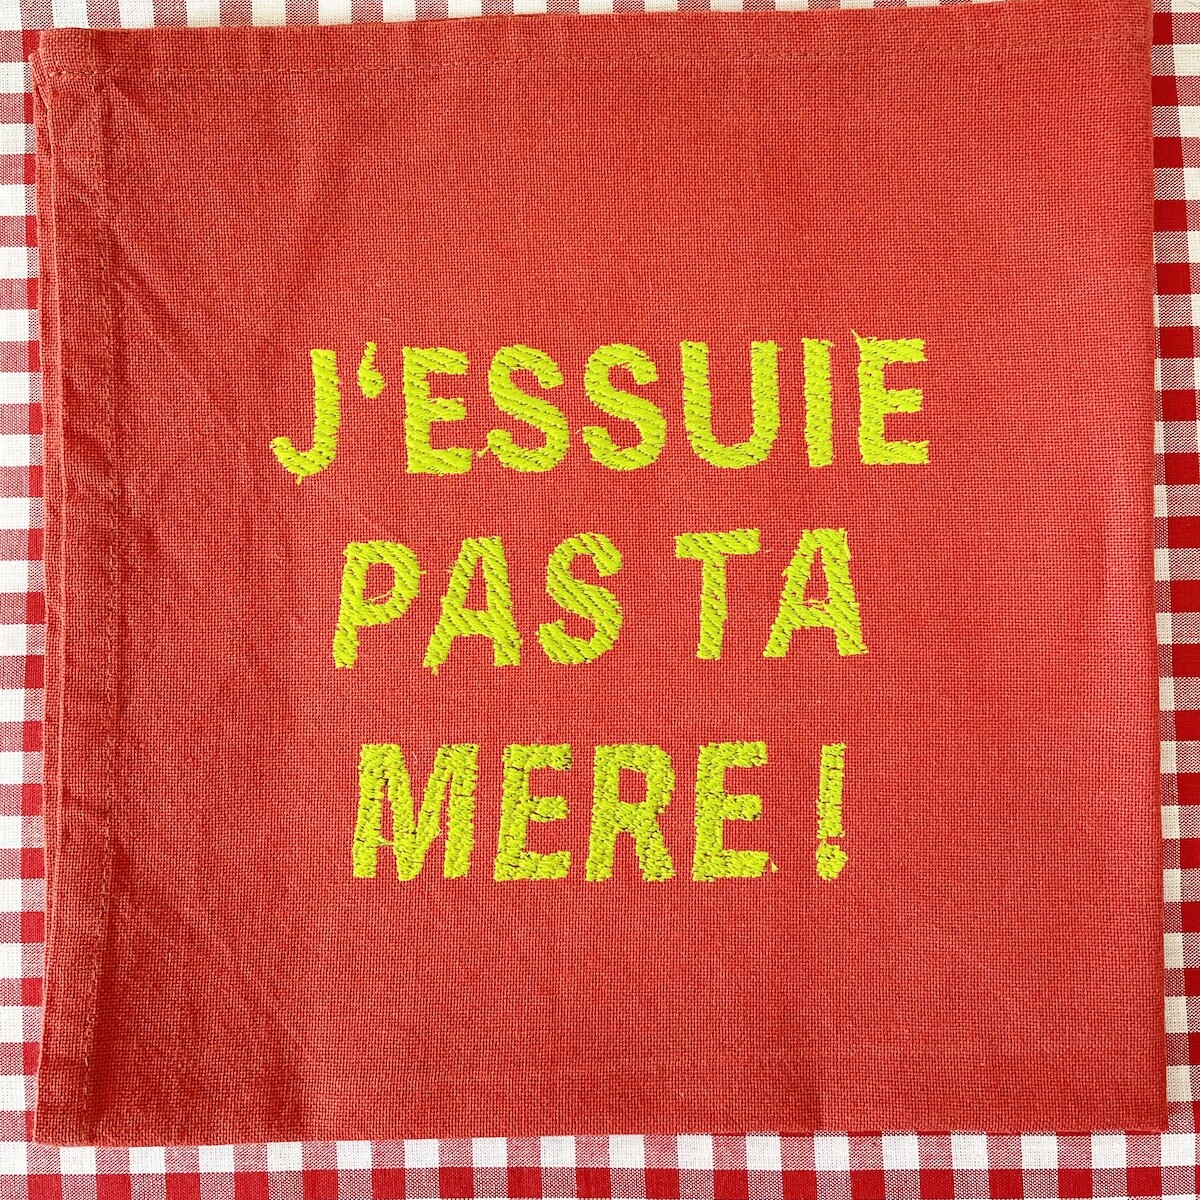 UPCYCLING SERVIETTE DE TABLE JESSUIE PAS TA MERE BY BROC INTO THE MOON